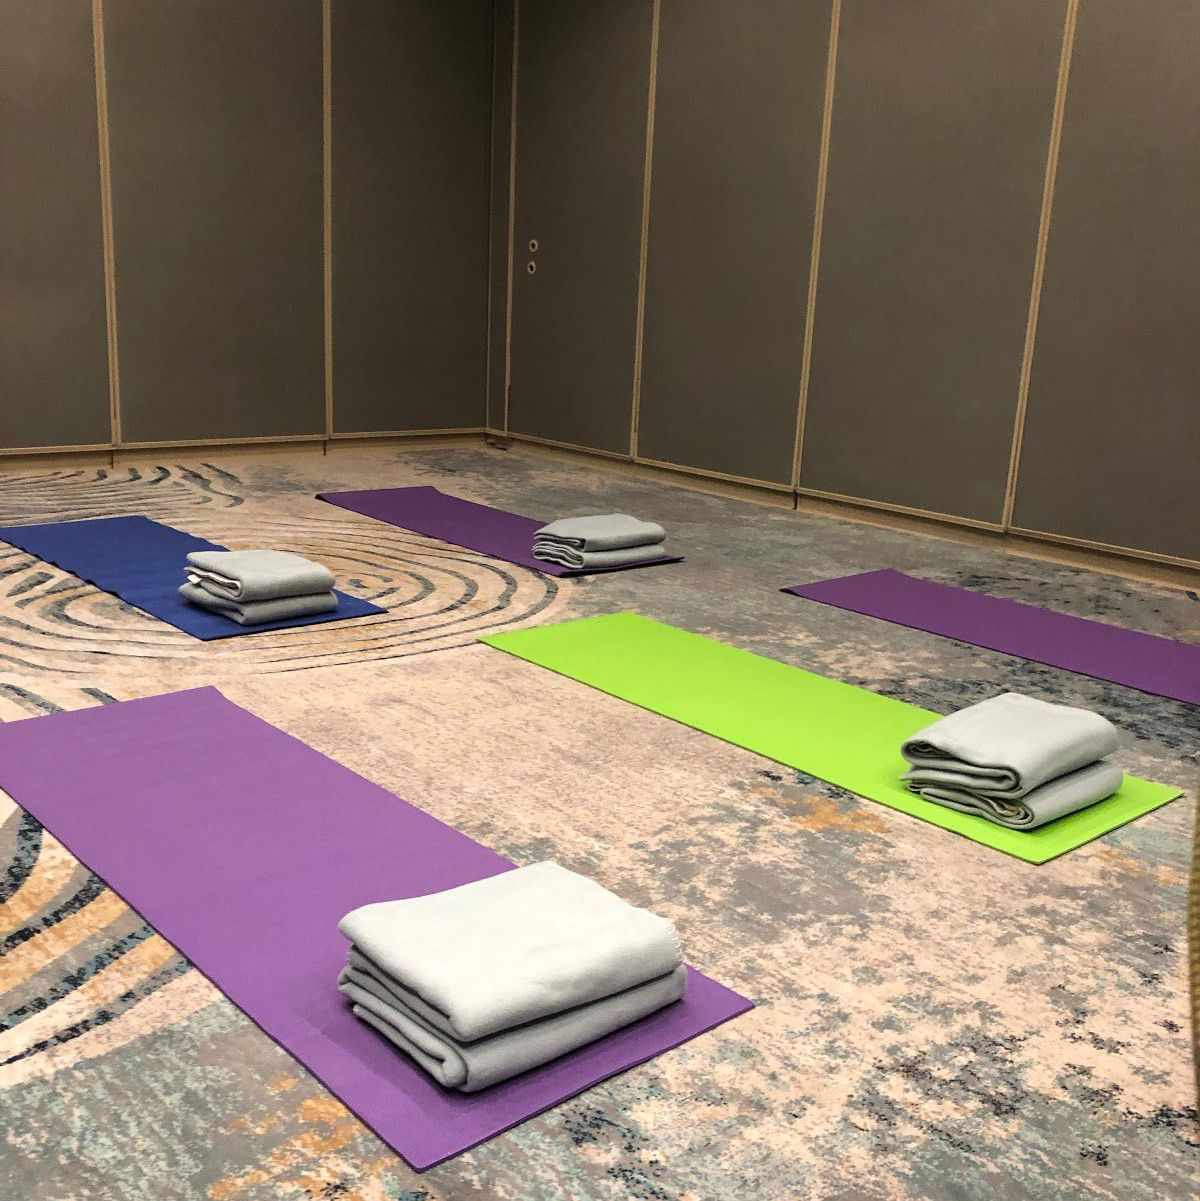 tapetes de ioga seguidos